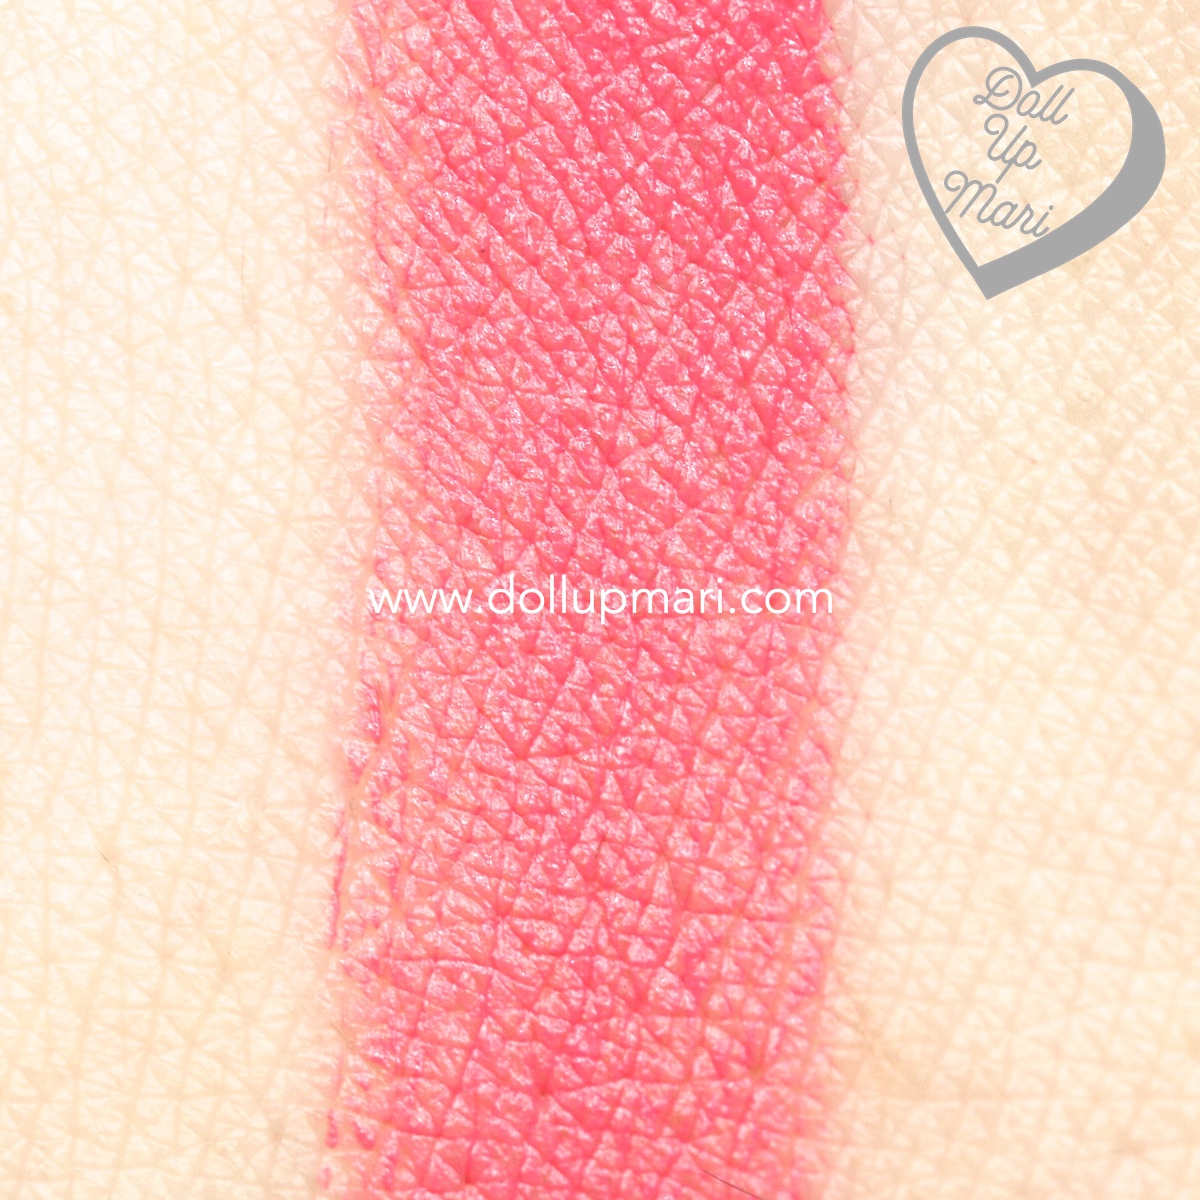 swatch of Rose Awakening shade of AVON Perfectly Matte Lipstick